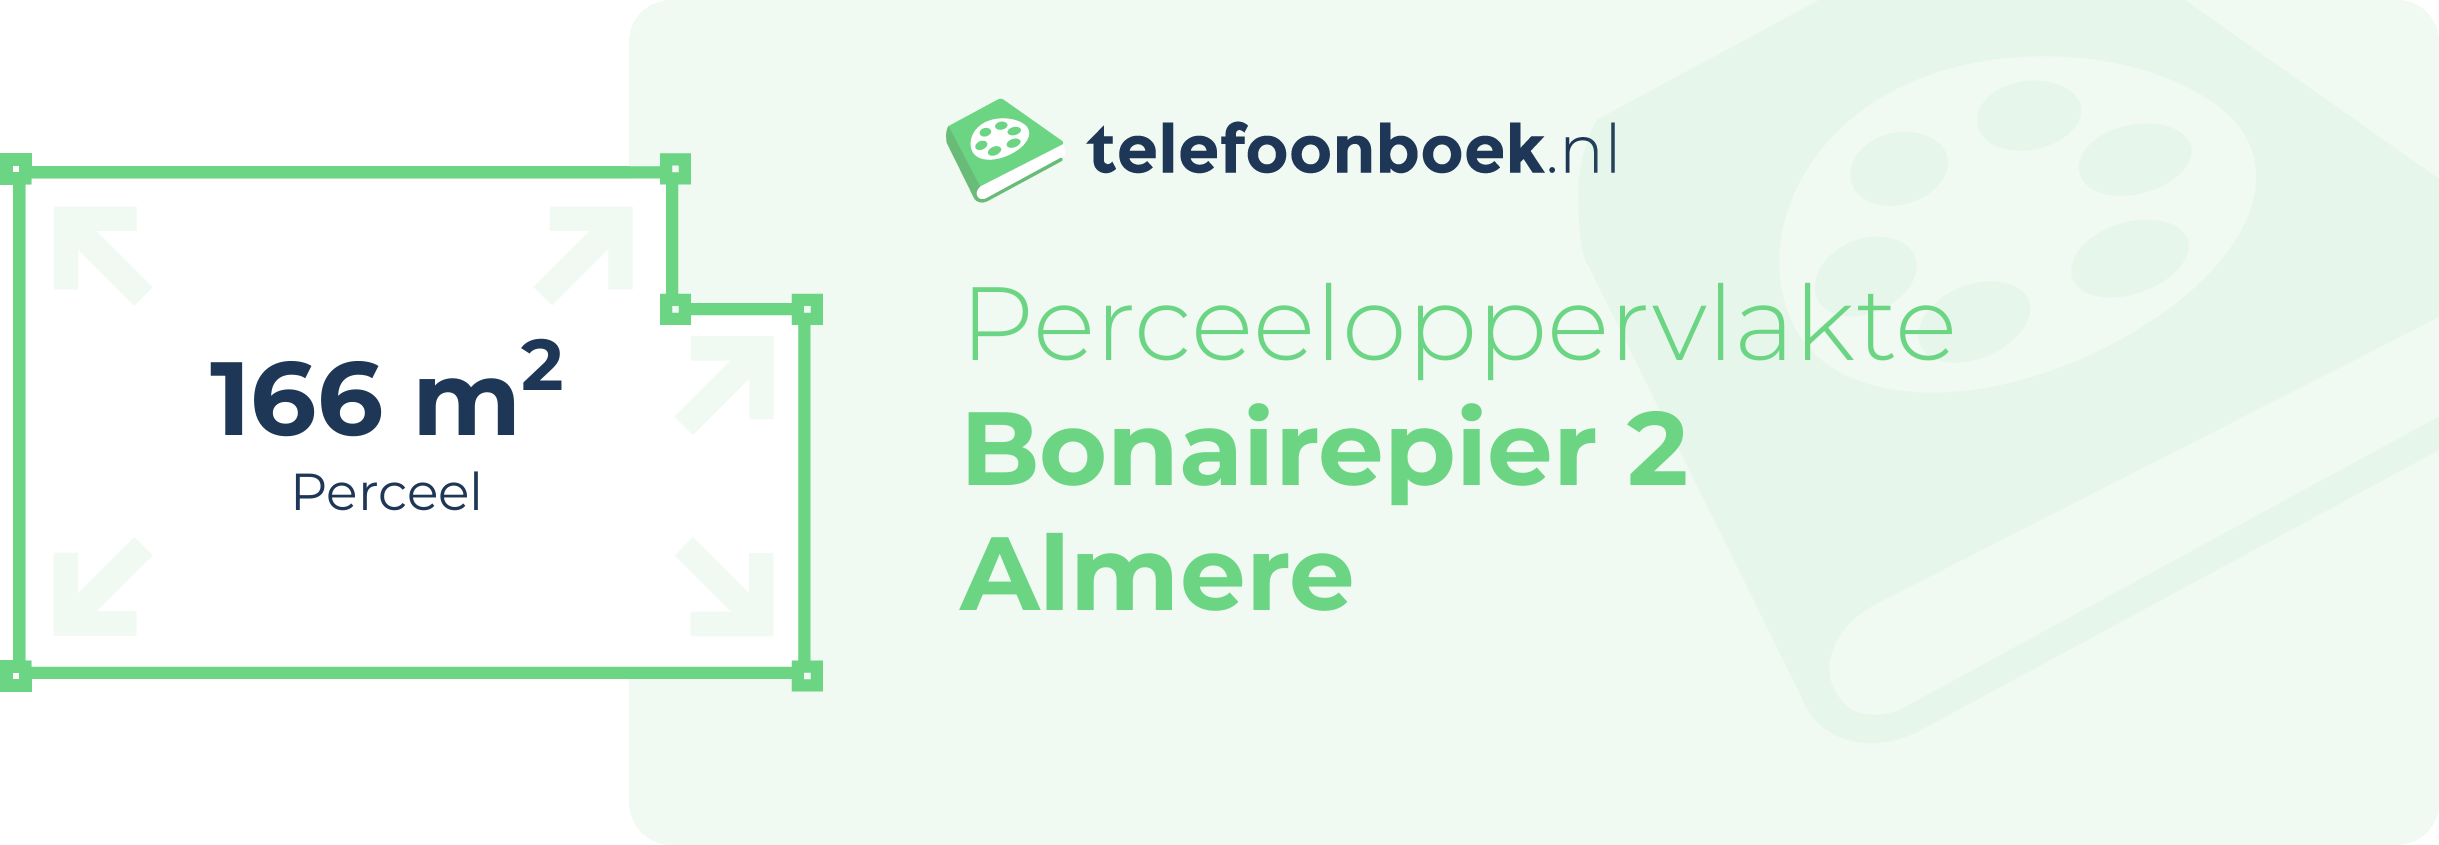 Perceeloppervlakte Bonairepier 2 Almere